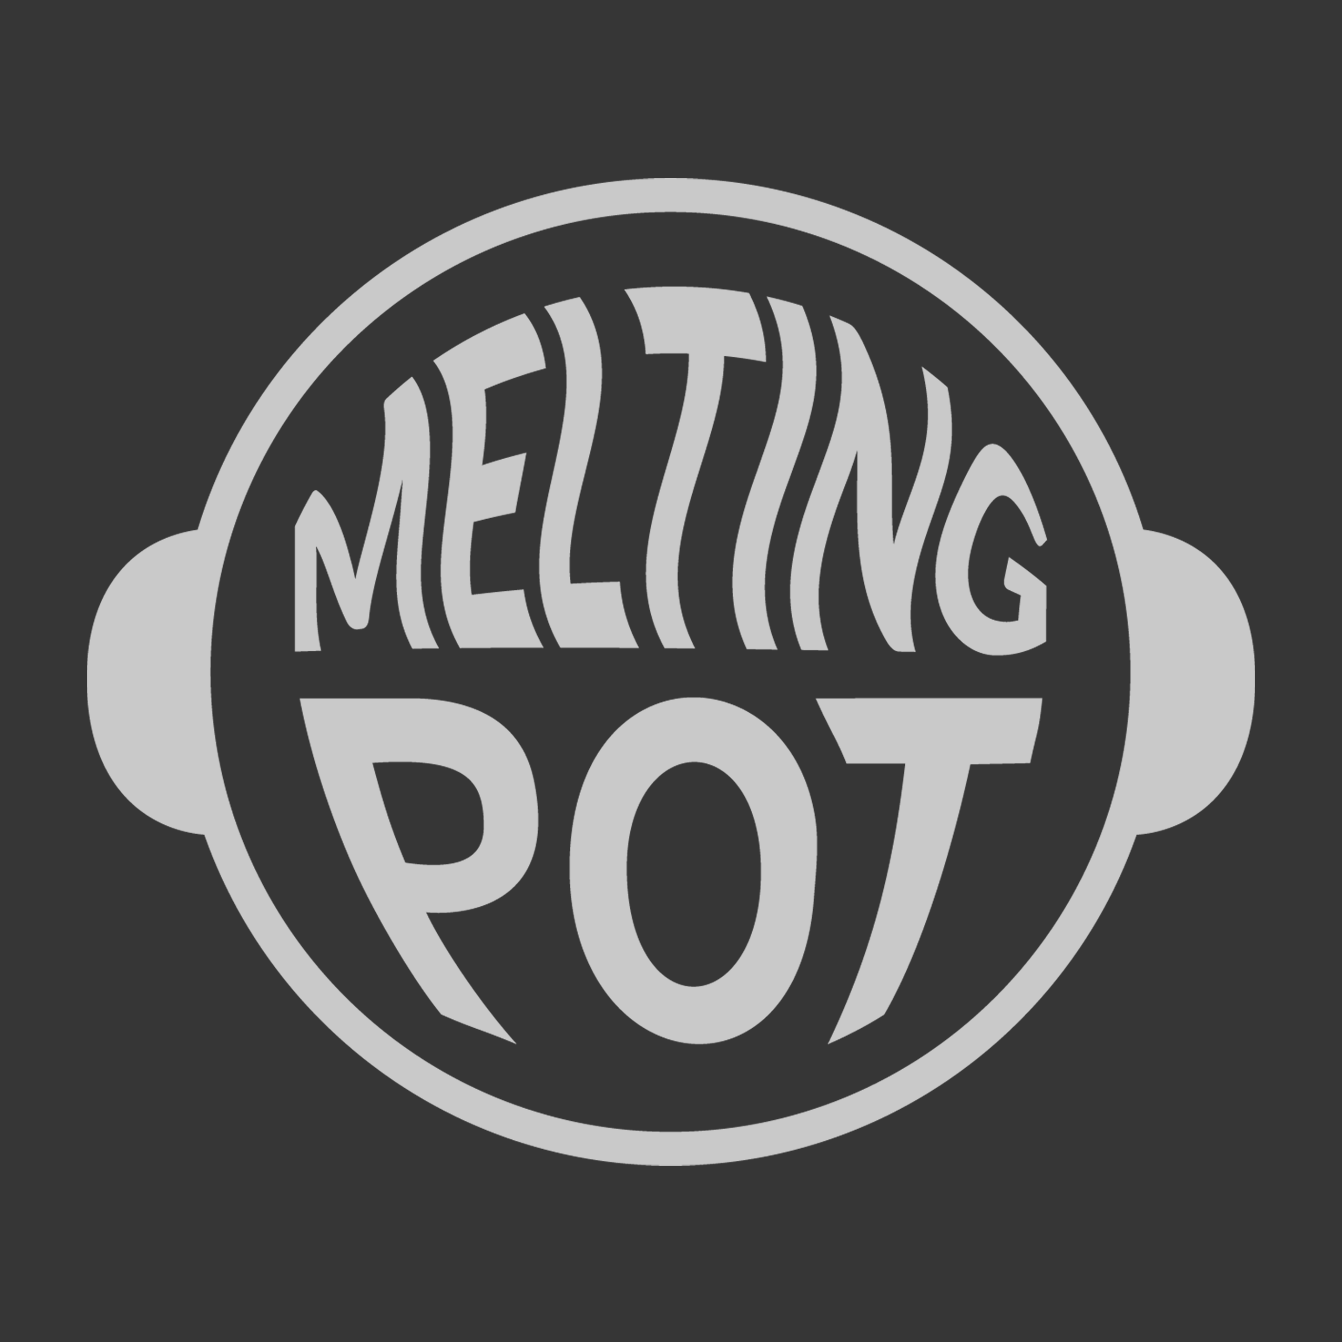 Melting Pot Collective